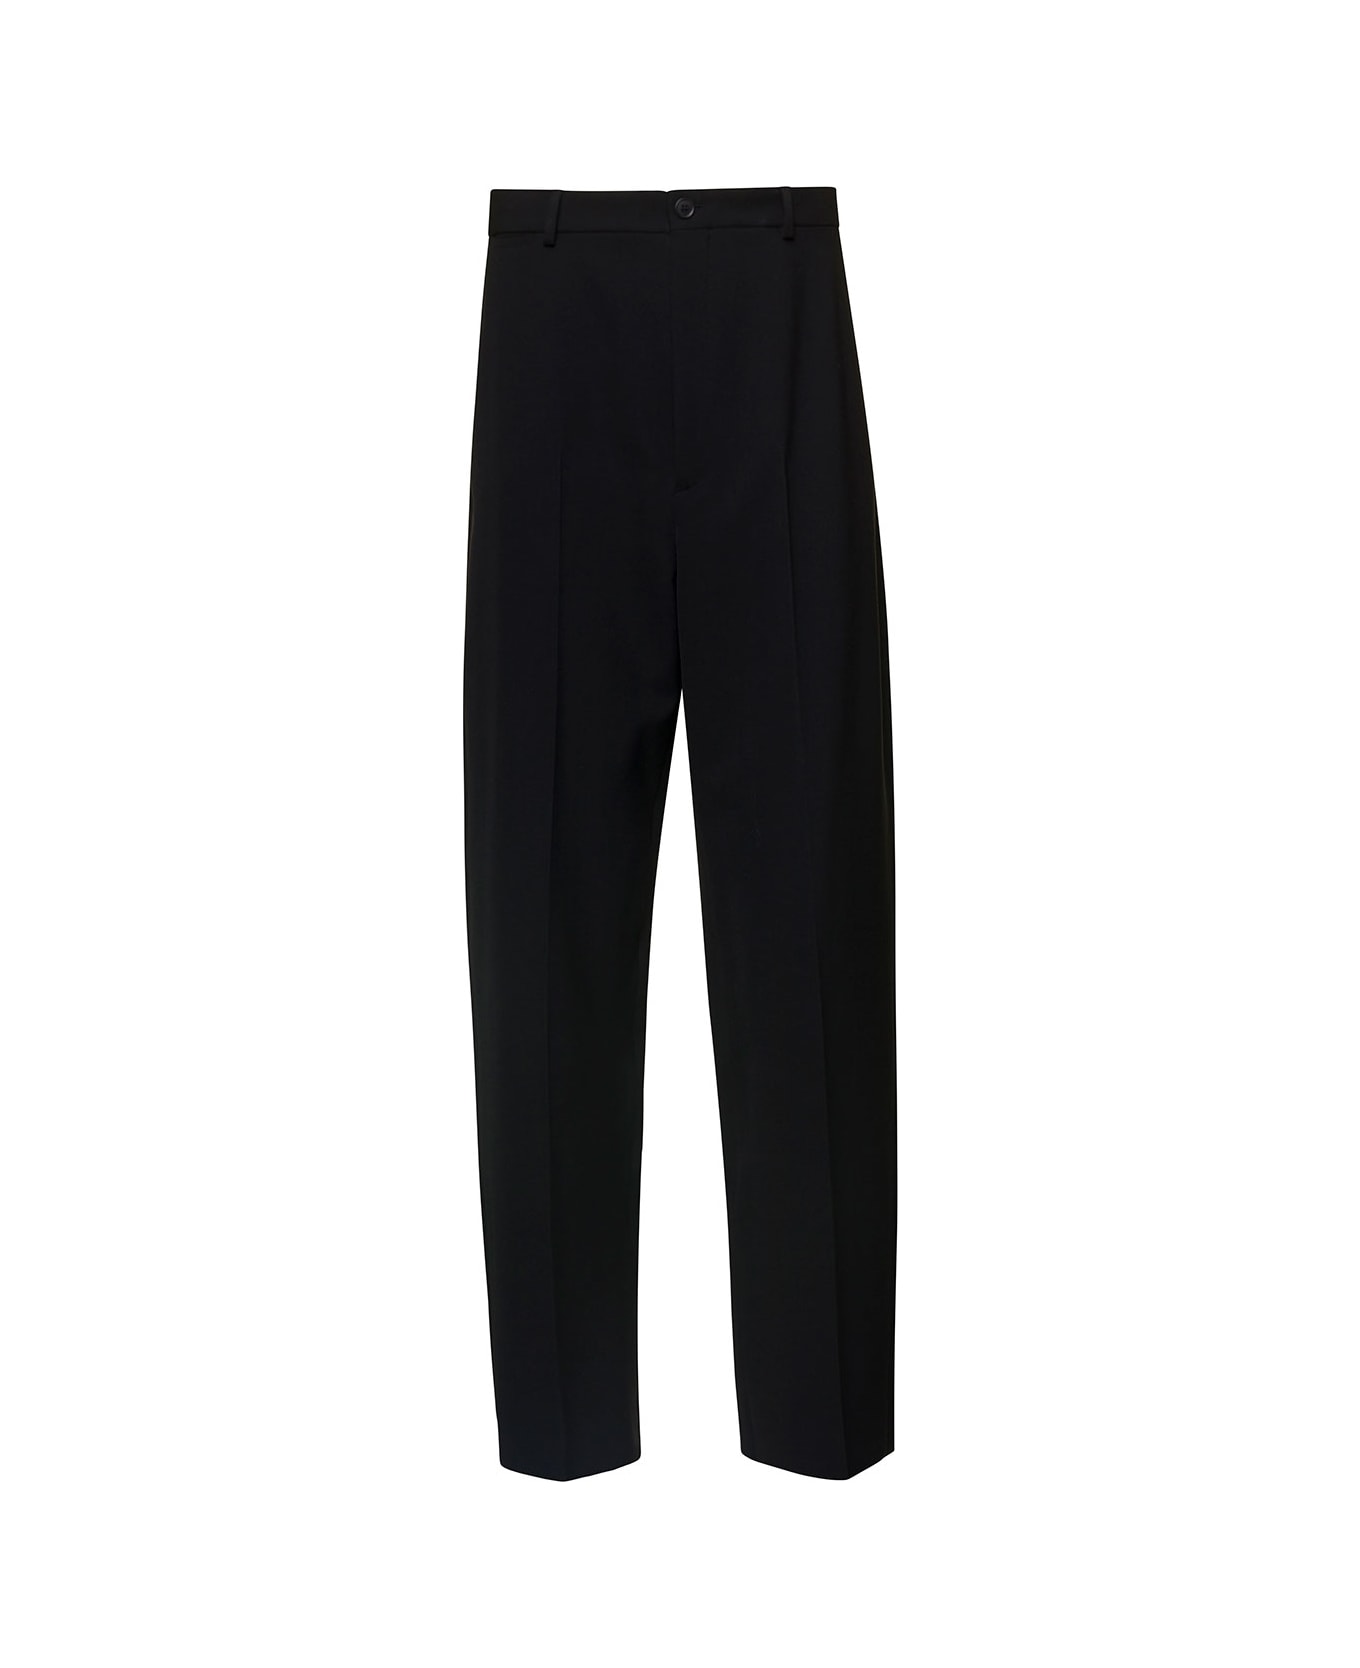 Balenciaga Oversized Black Tailored Pants In Wool Blend Man - Black